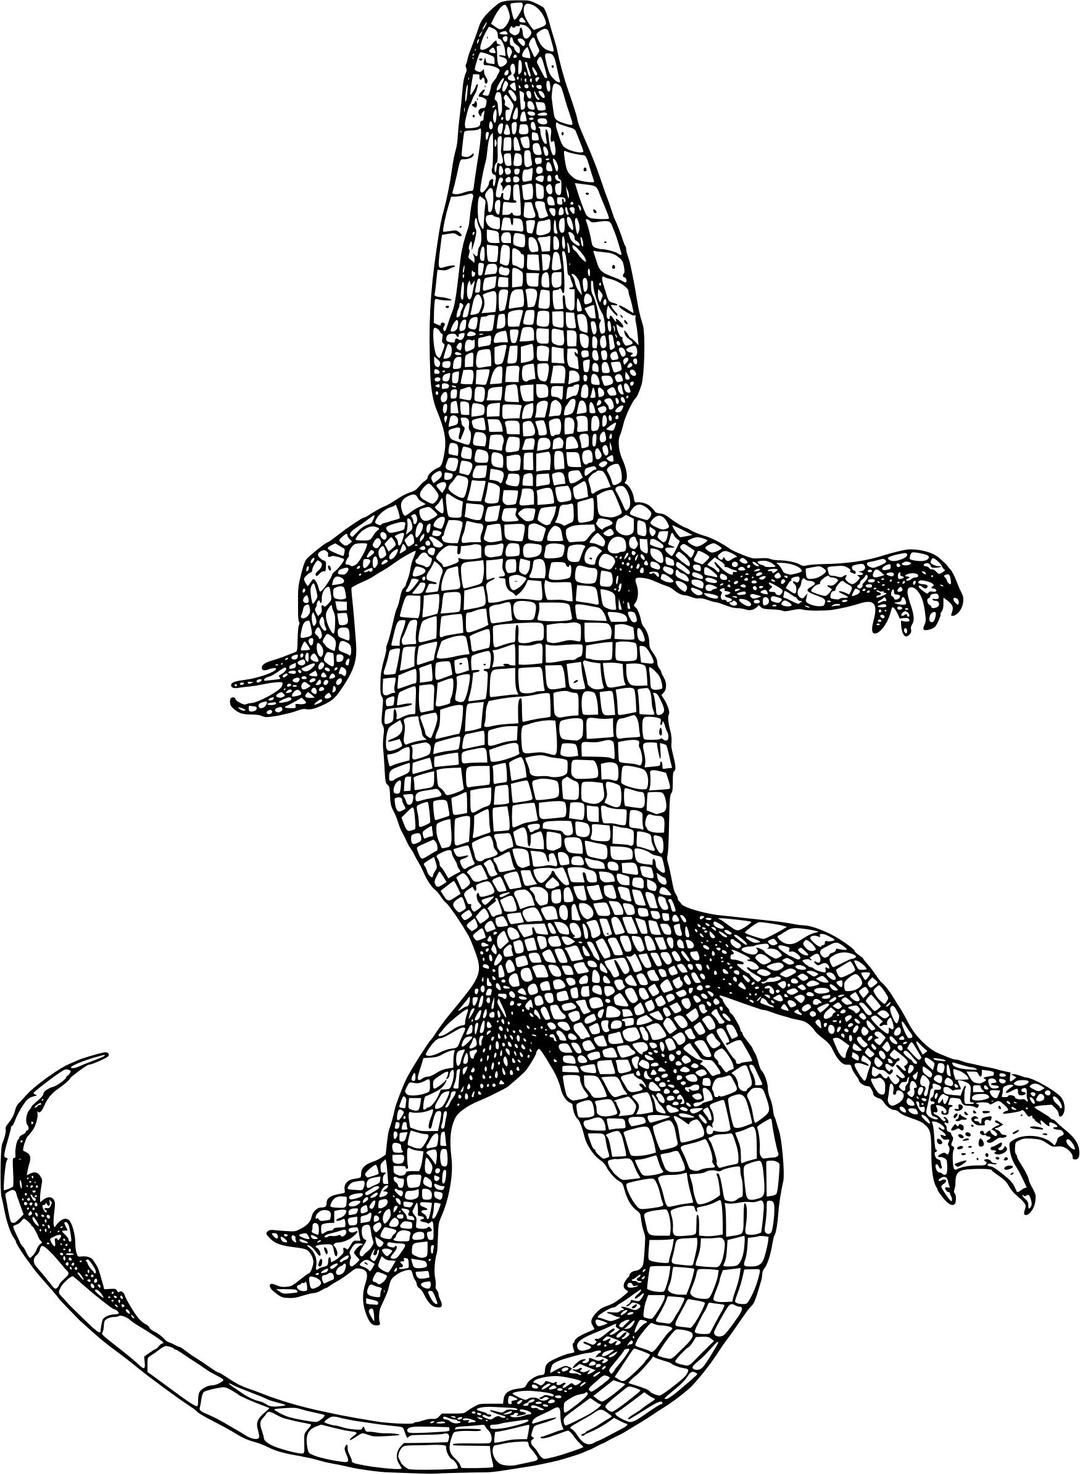 Gator Bottom png transparent